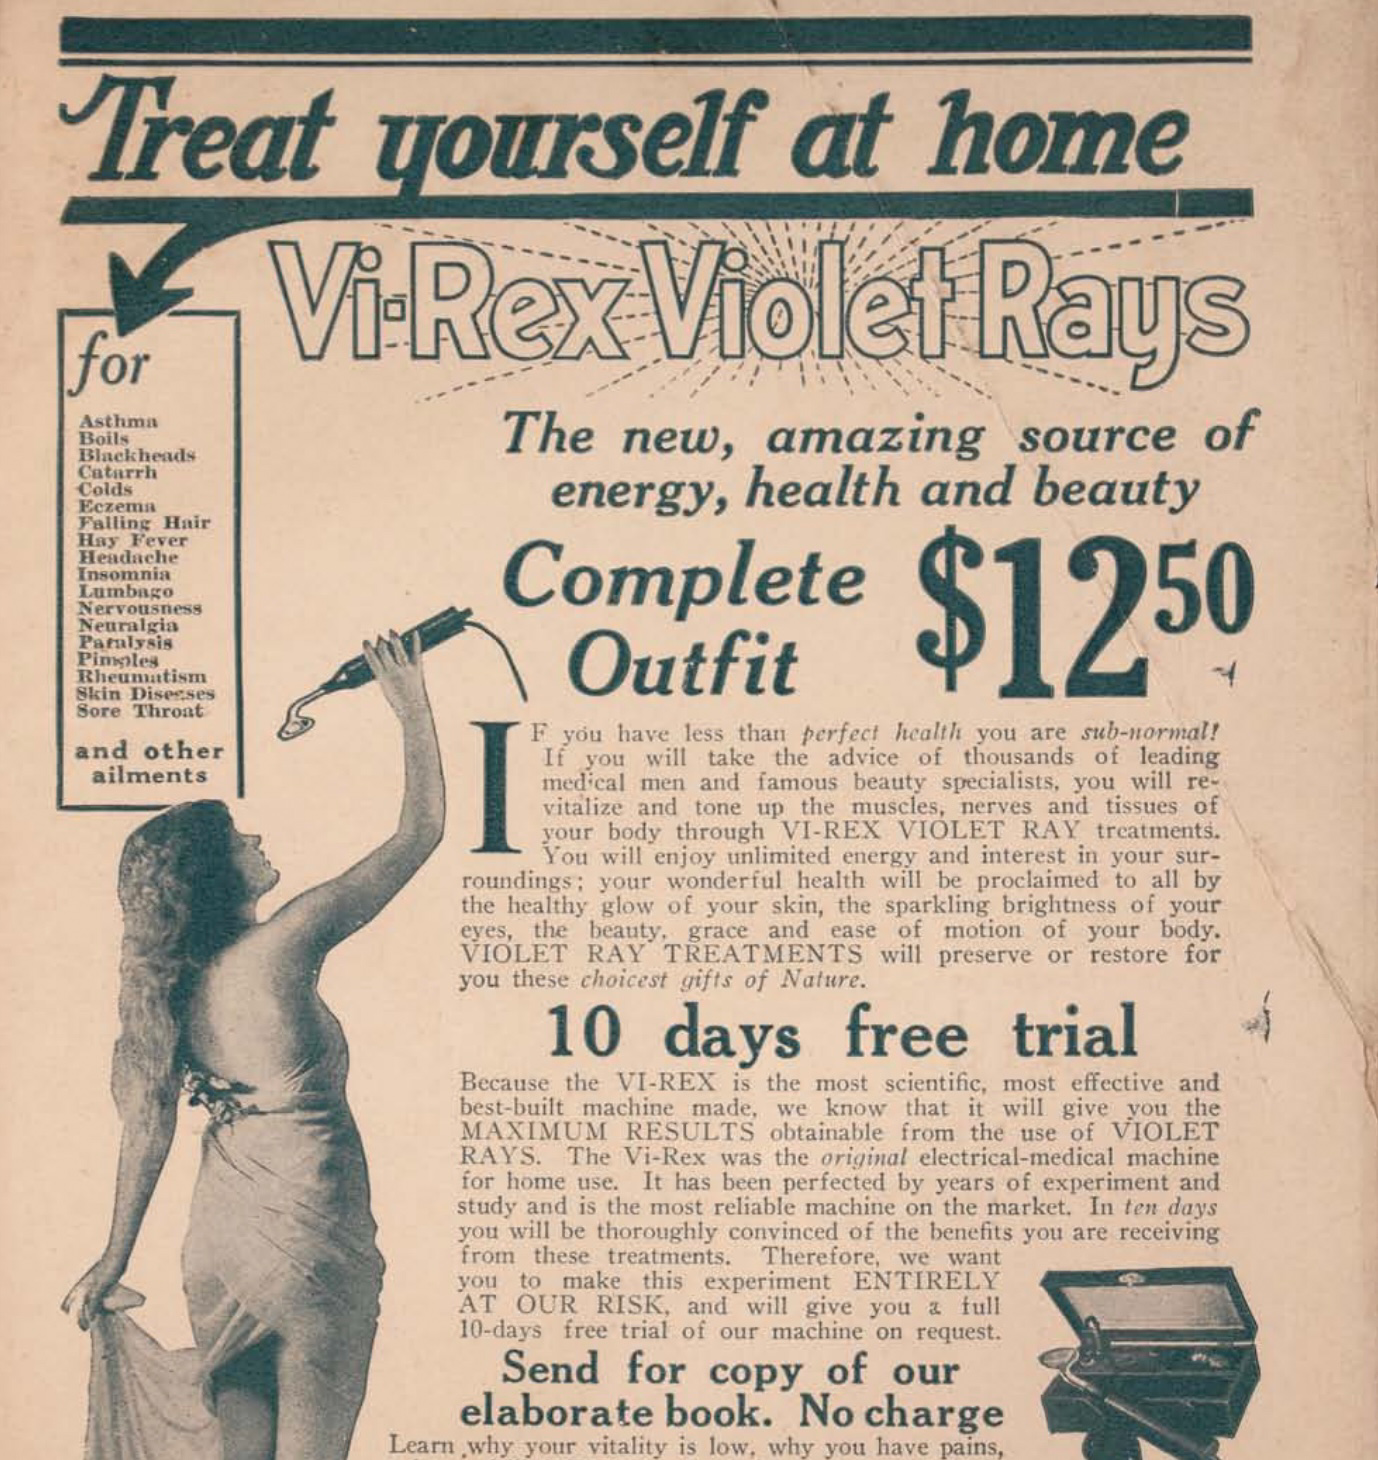 Appliance Wheels Advertisement, December 1977. : r/vintageads